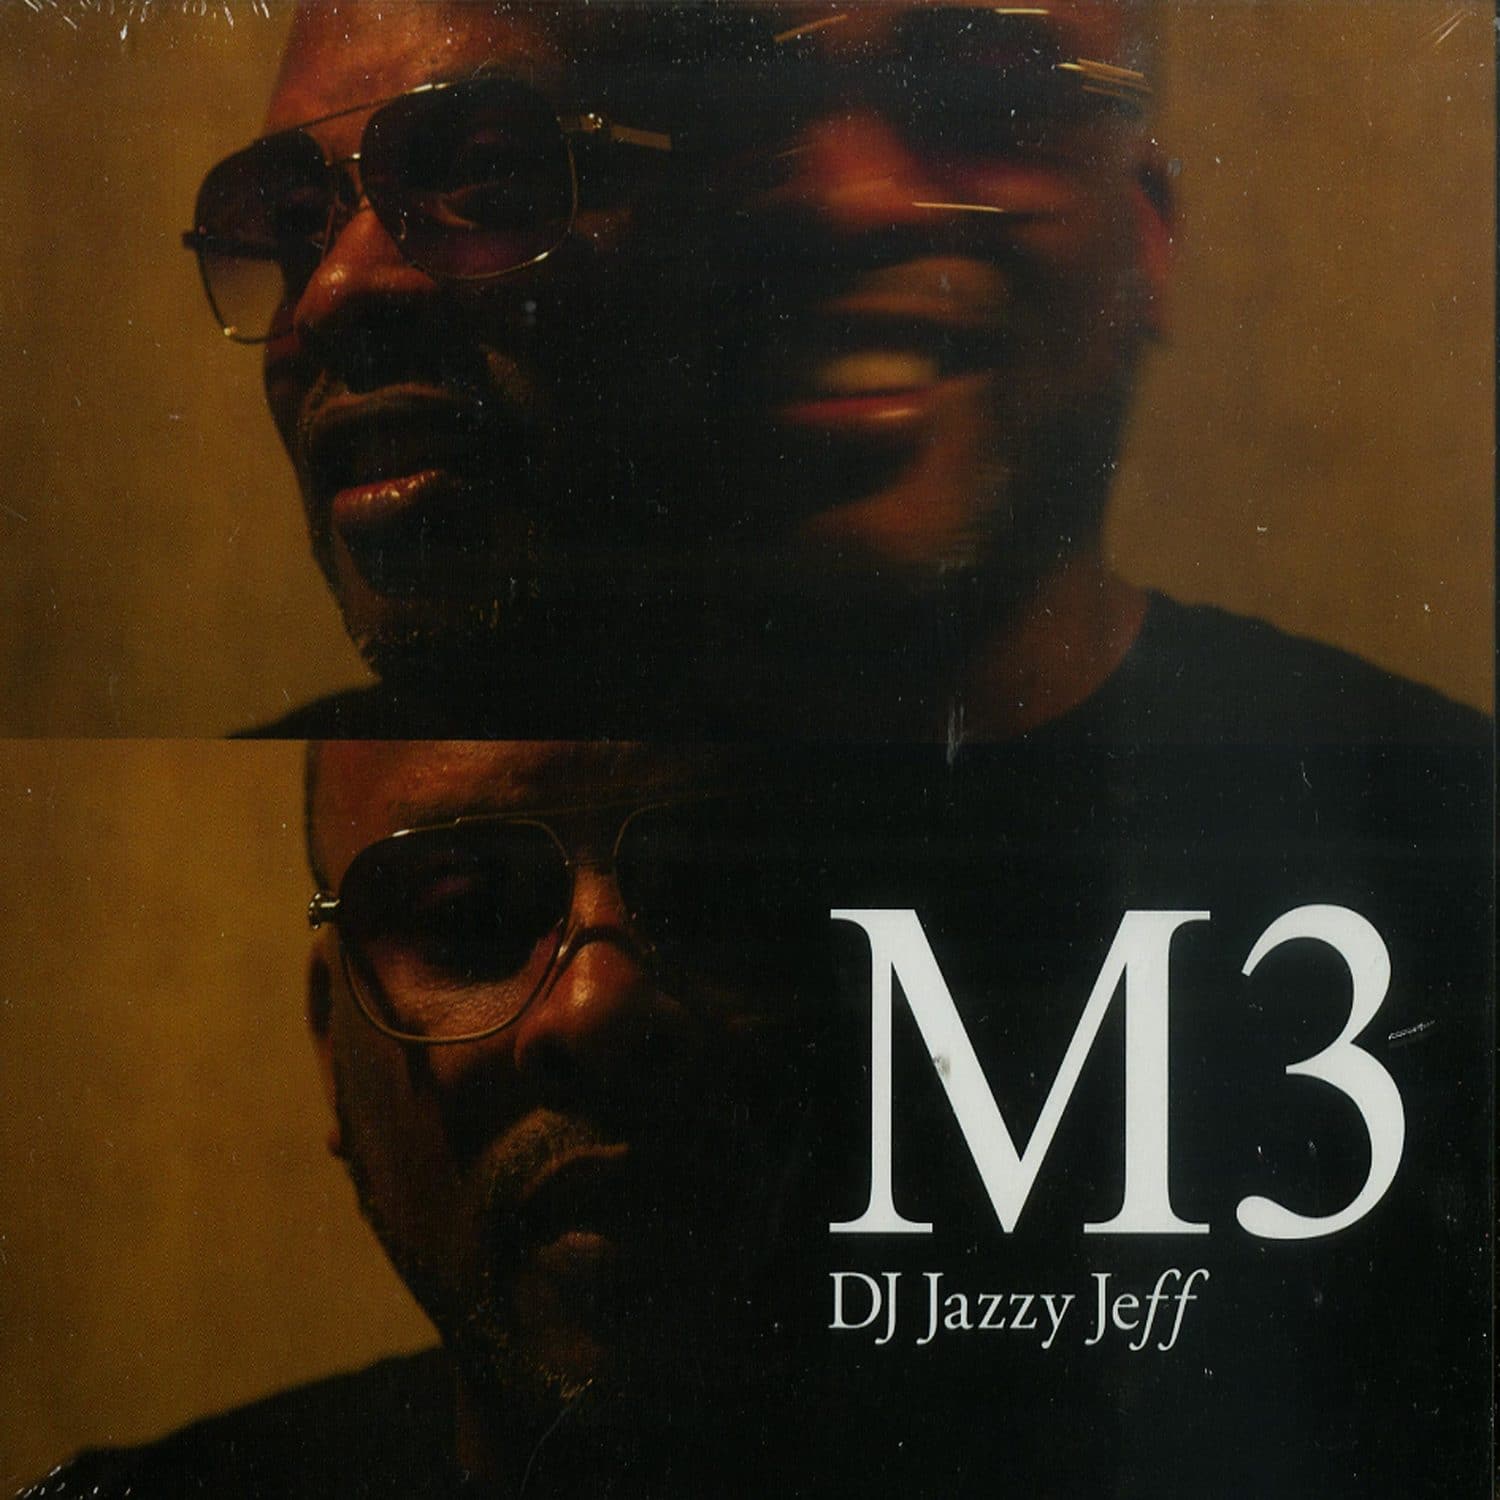 DJ Jazzy Jeff - M3 